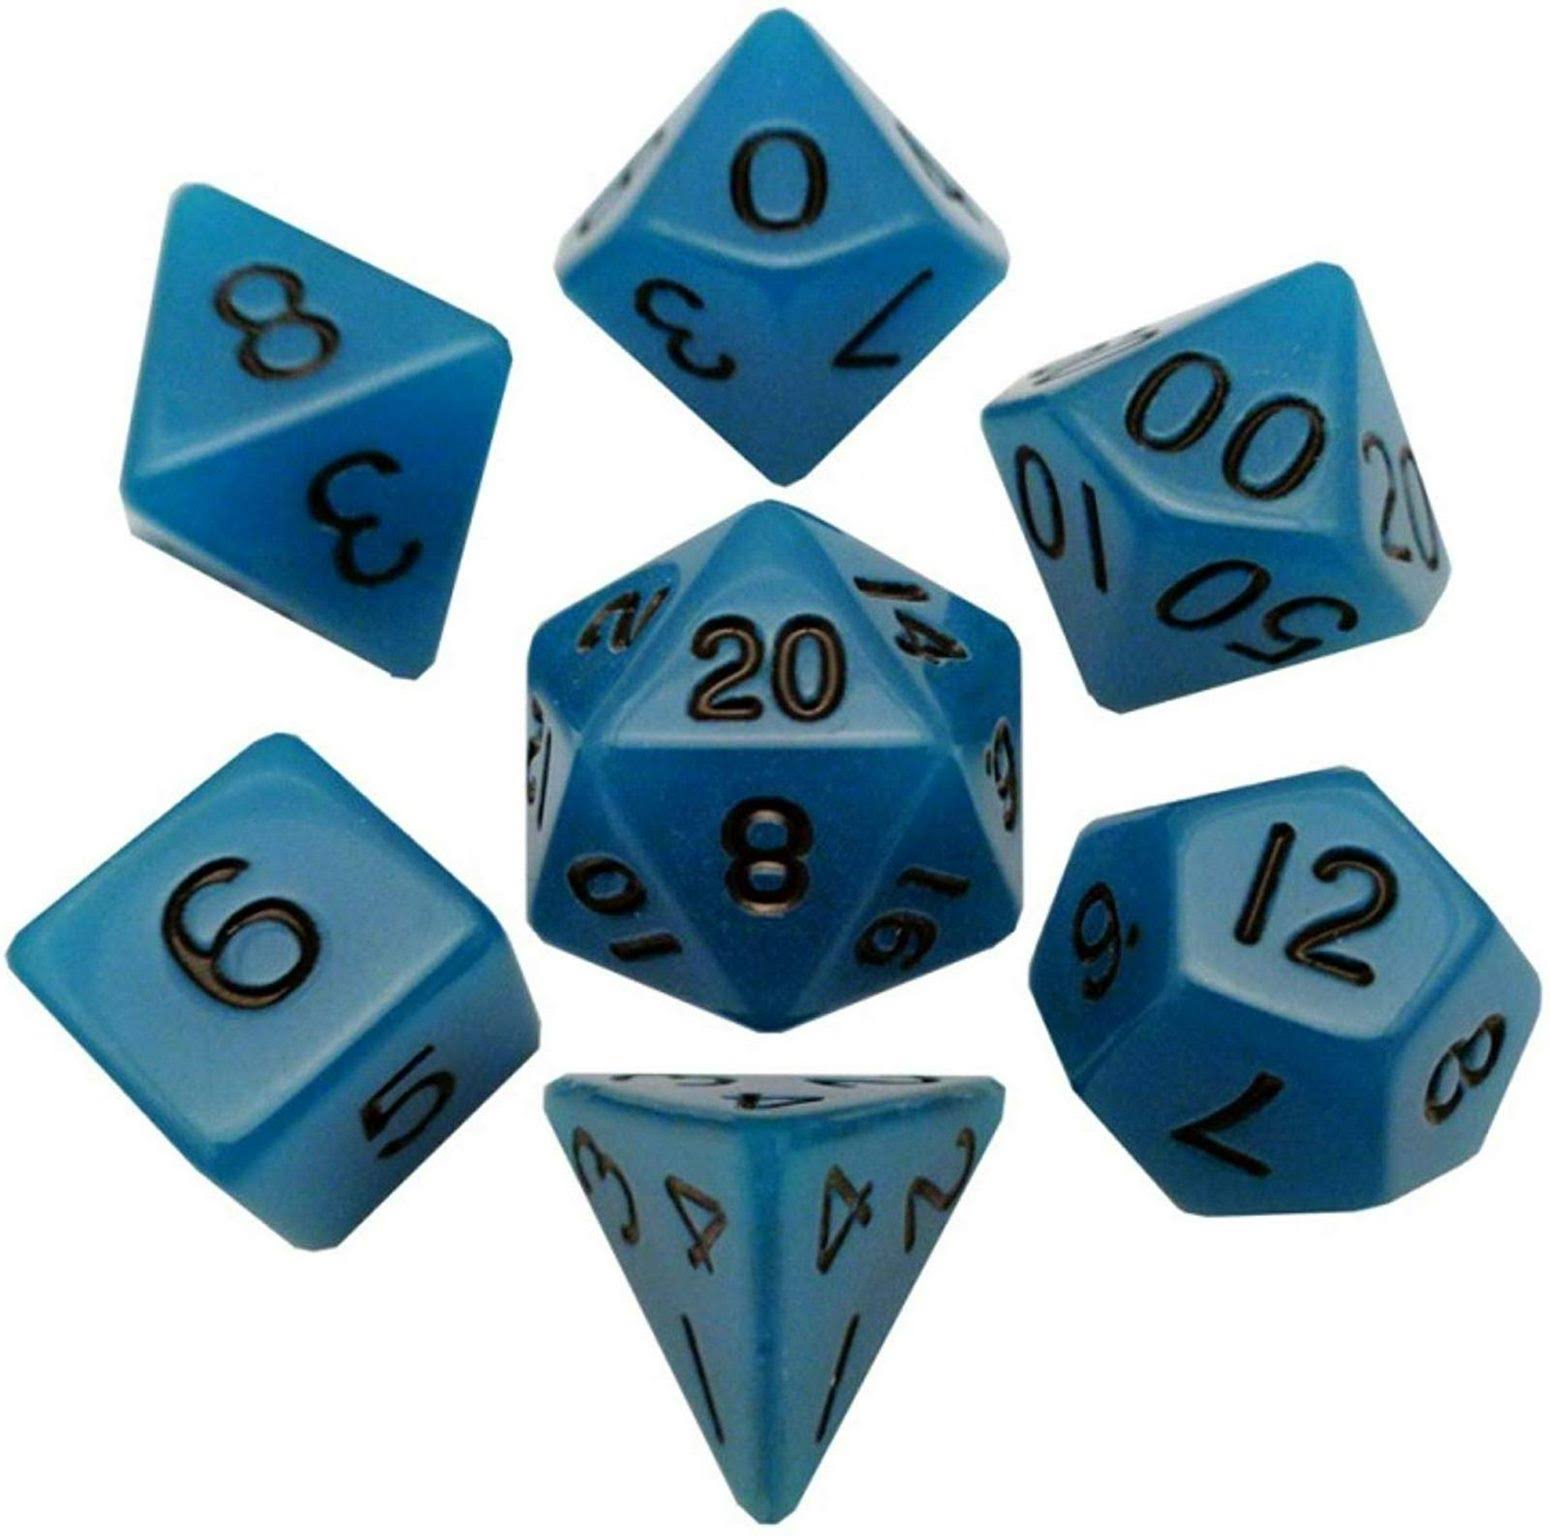 Metallic Dice Games Polyhedral Resin­ Dice Set - Blue, 7ct